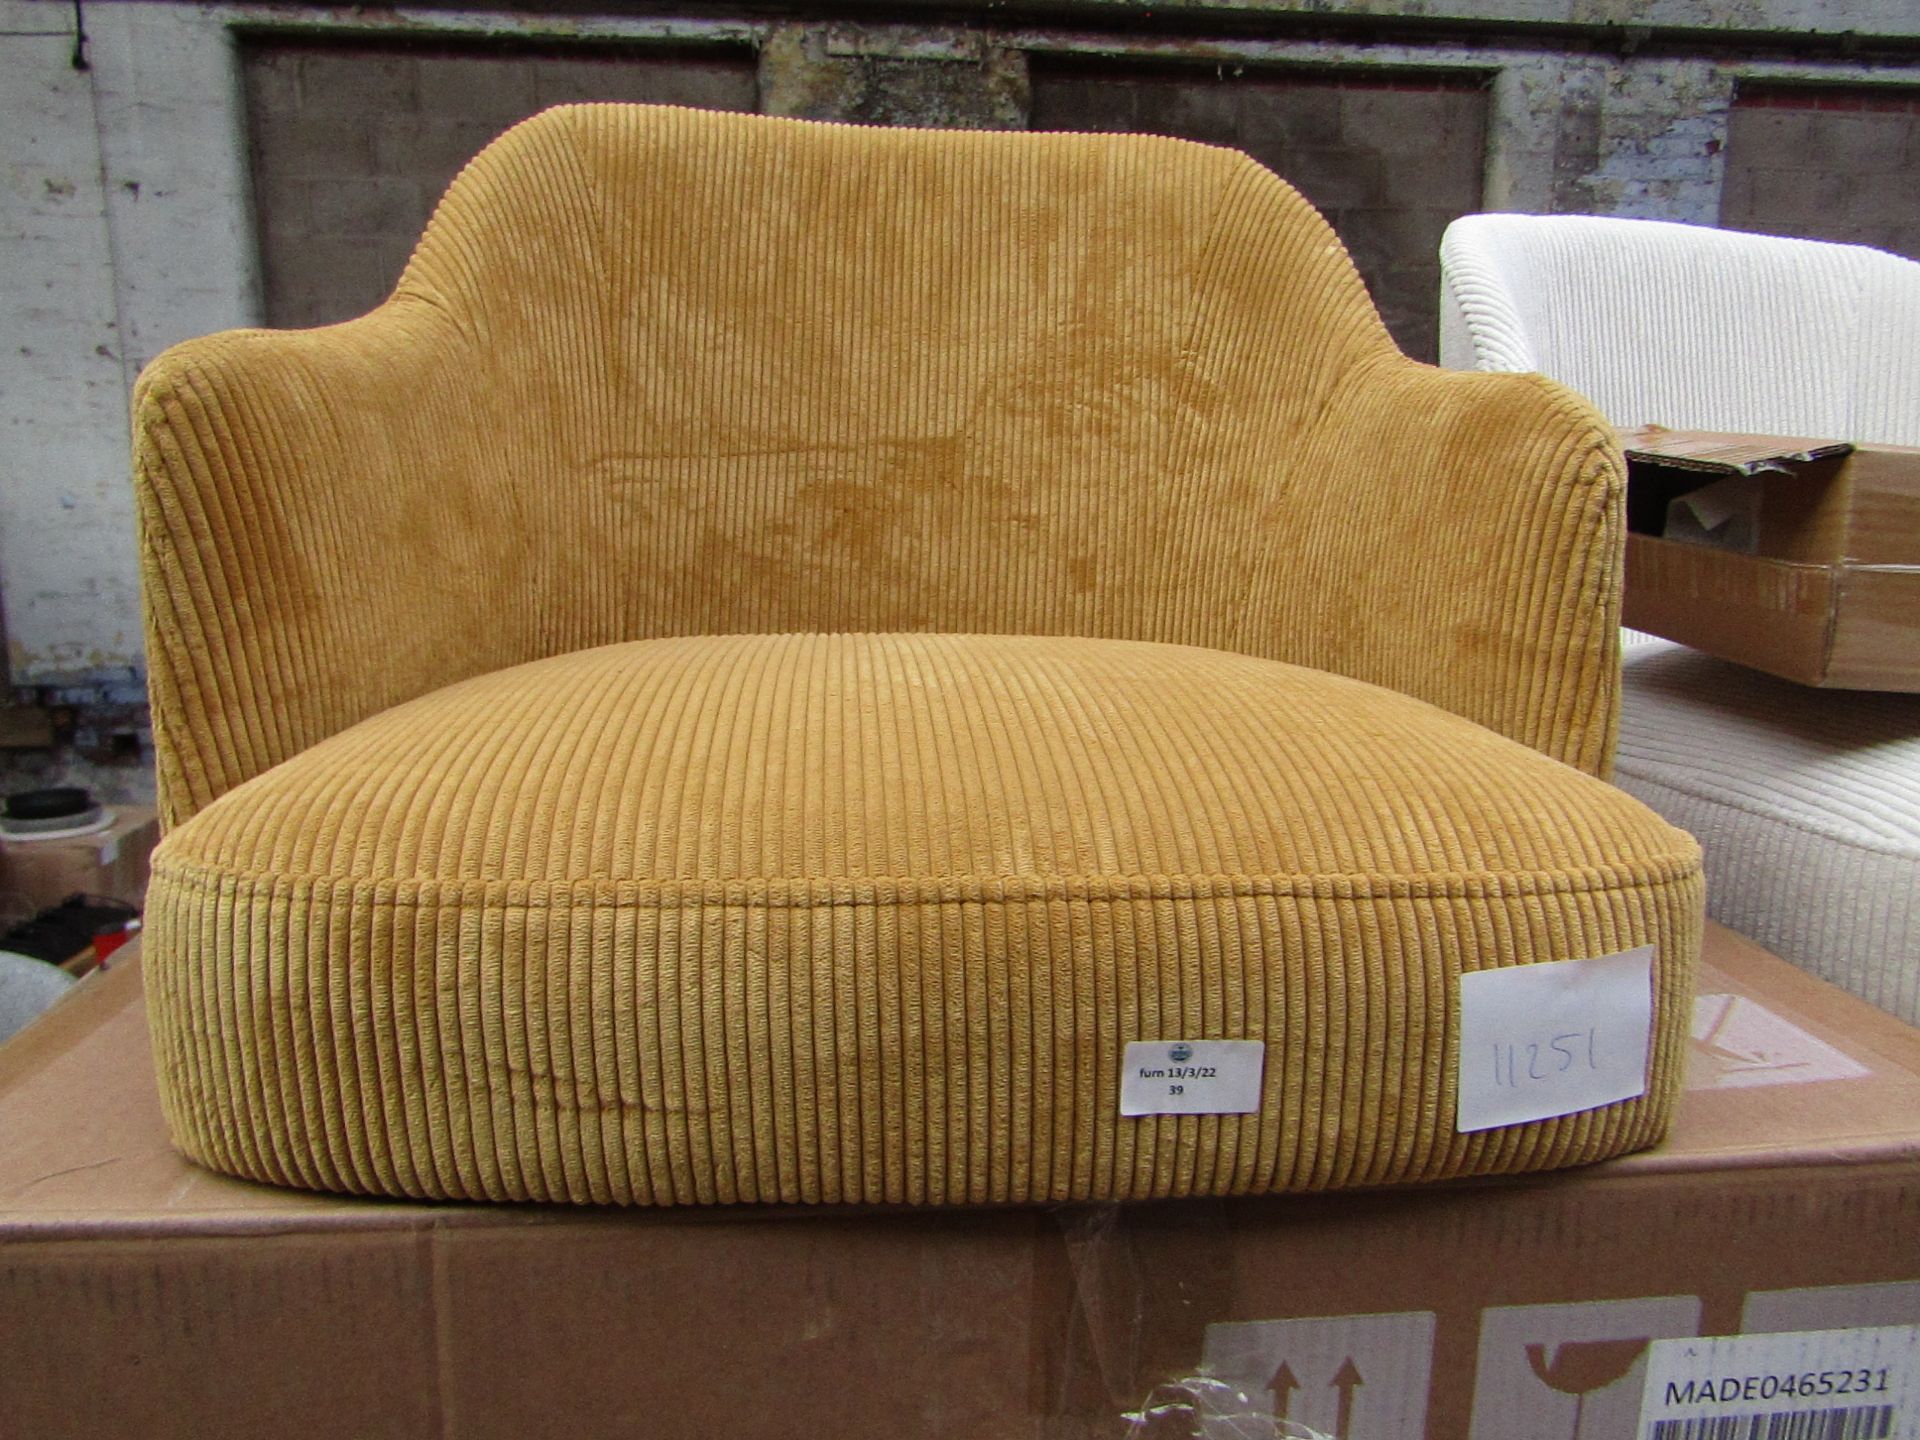 1 x Made.com Swinton Office Chair Mustard Corduroy Velvet with Black Legs RRP £225.00 SKU MAD-